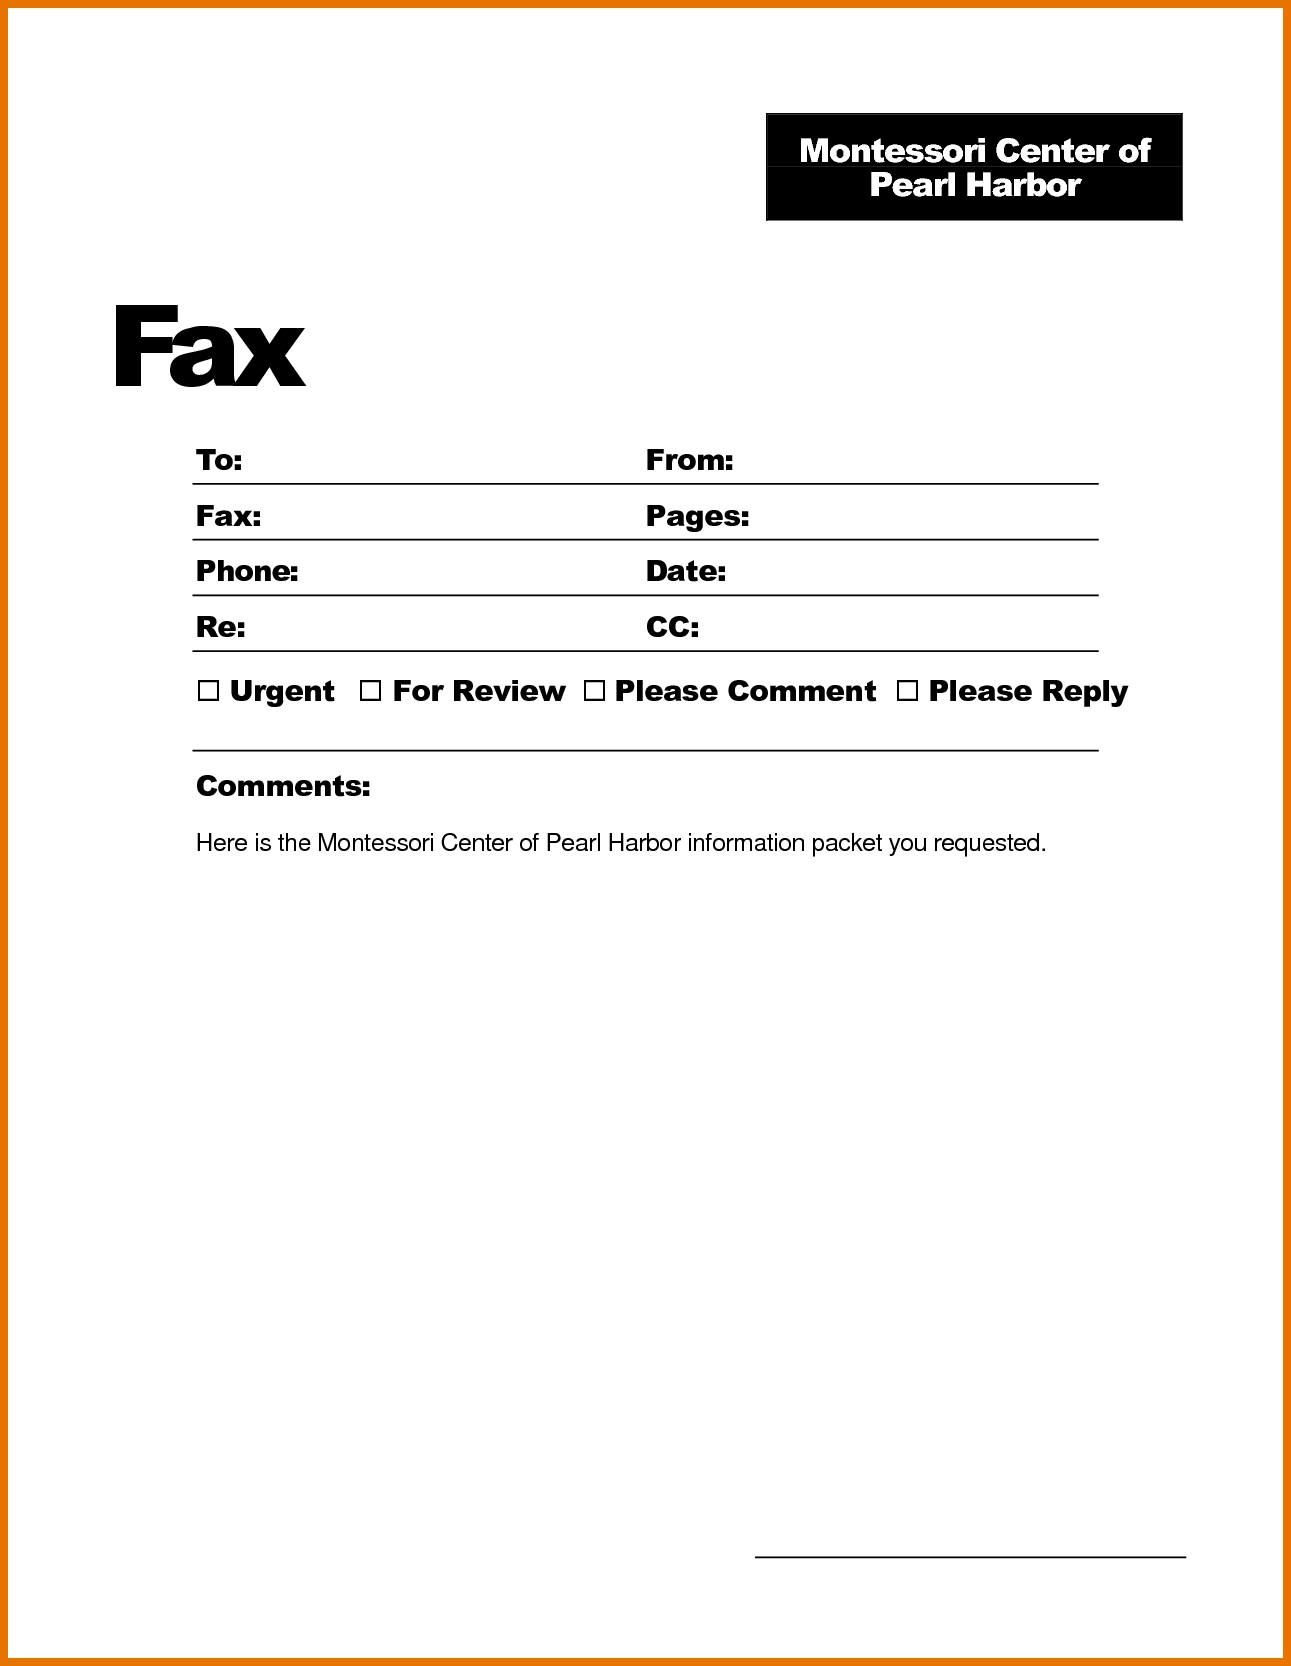 fax-templates-microsoft-word-2010-qualads